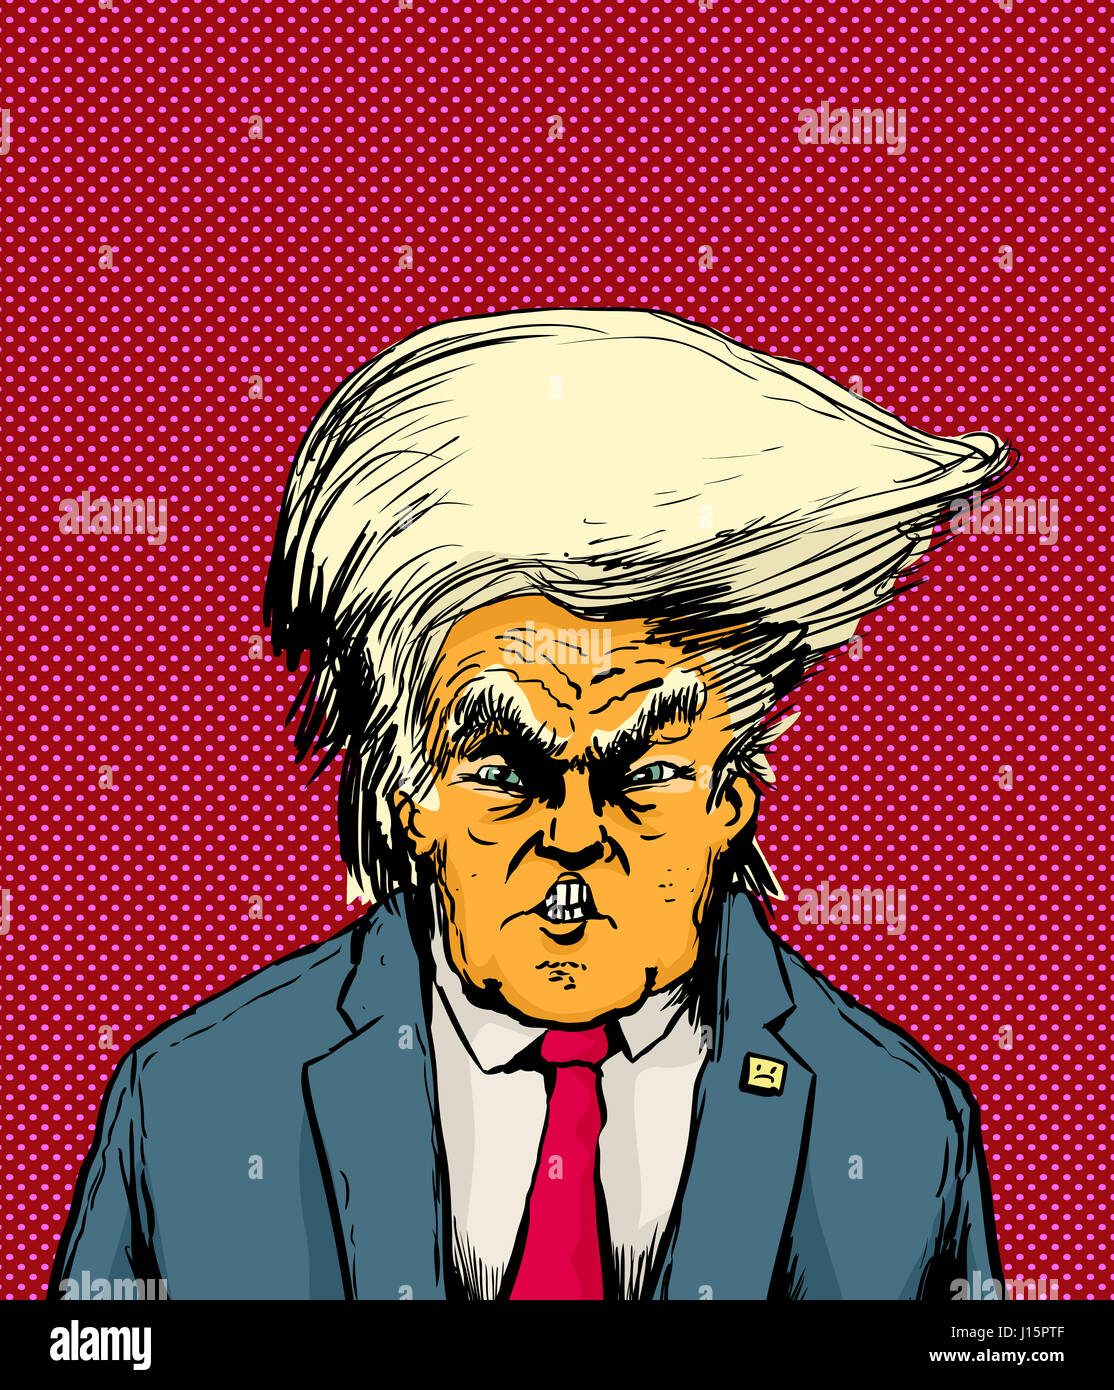 April 18, 2017. Caricature of orange skinned Donald Trump with Bouffant hairdo Stock Photo